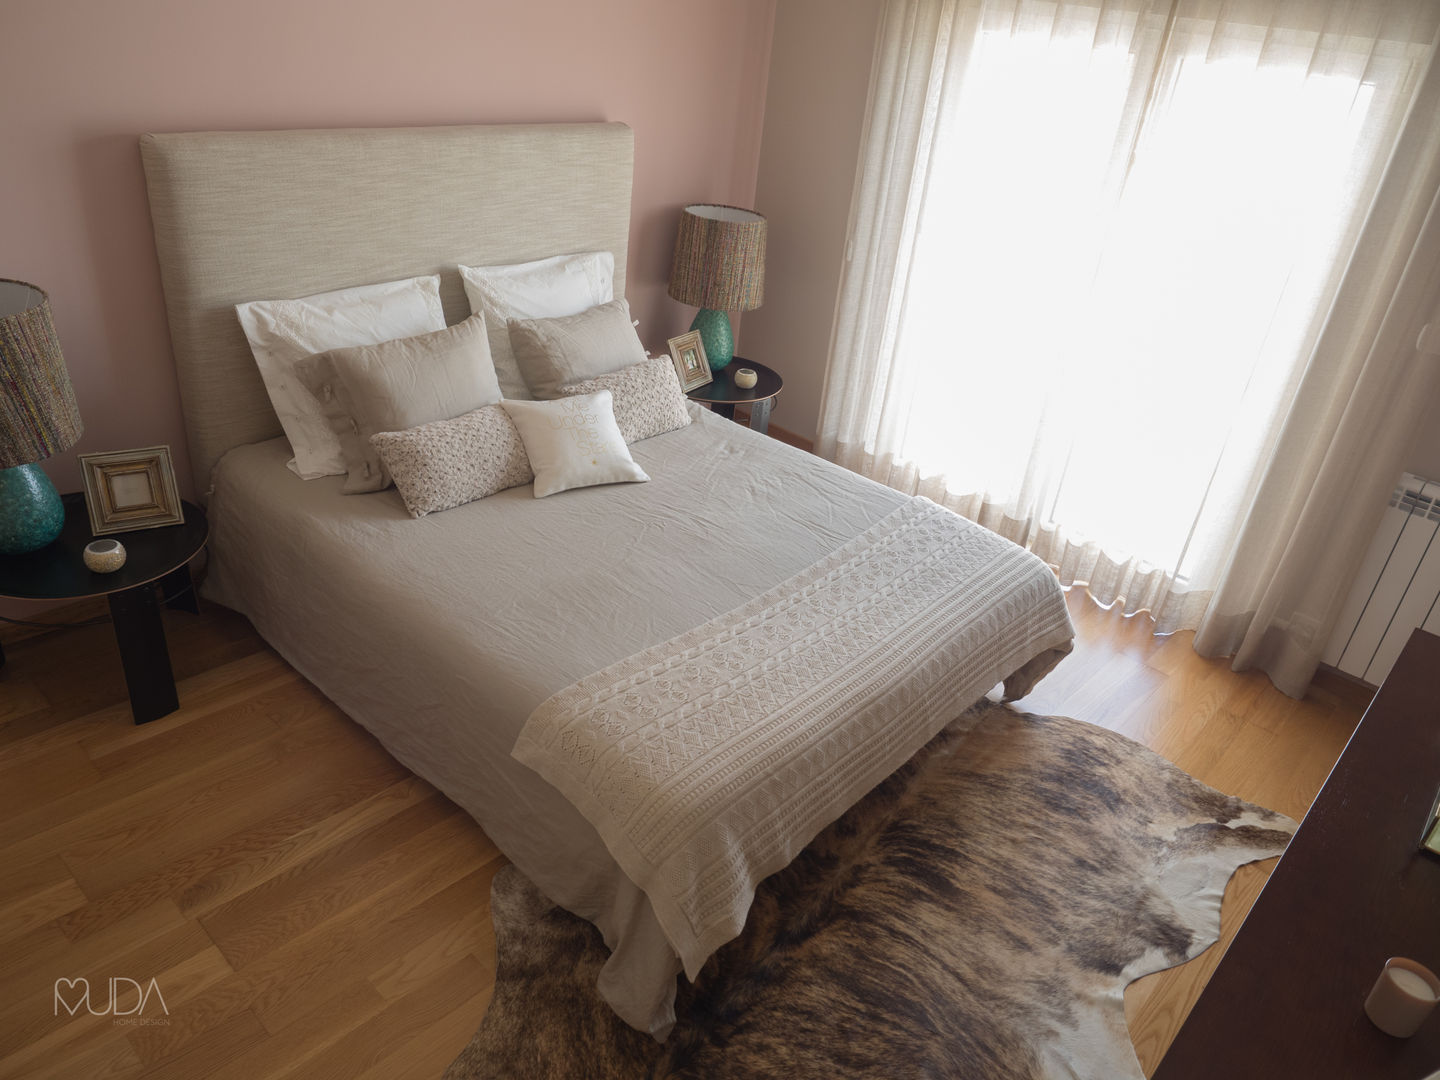 IS Bedroom - Odivelas, MUDA Home Design MUDA Home Design